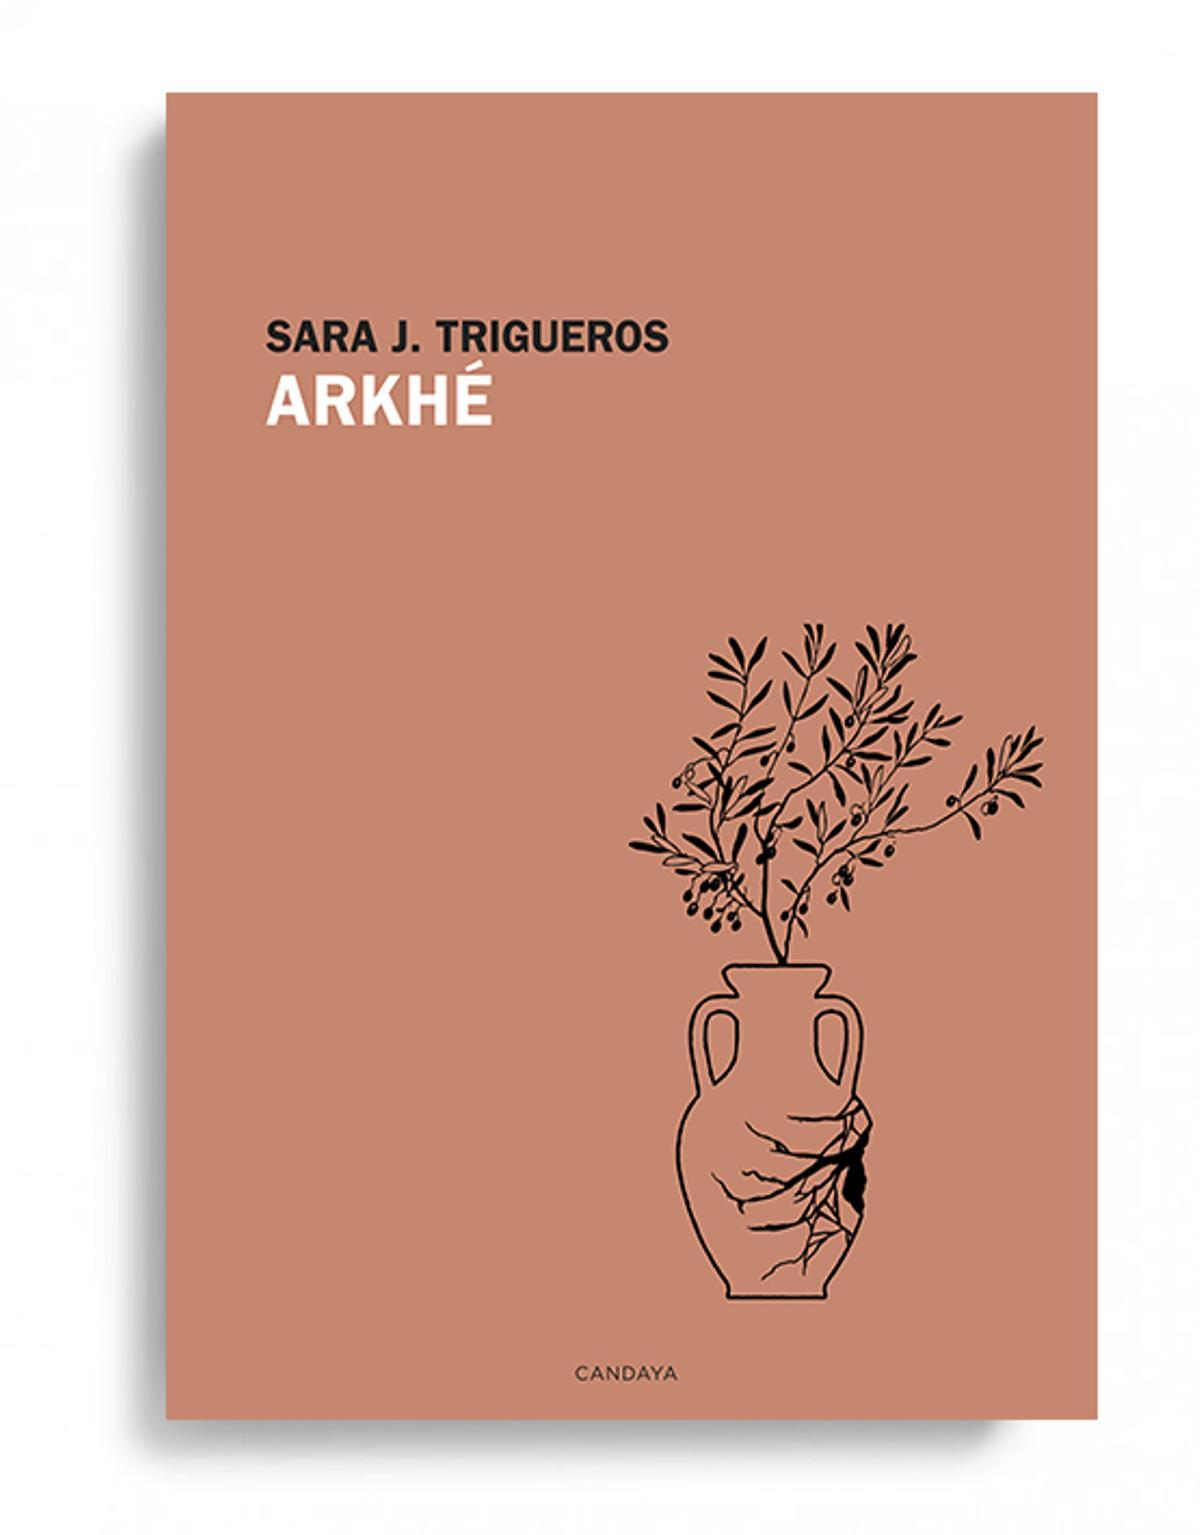 Portada del libro de poesía &quot;Arkhé&quot;, de Sara J. Trigueros